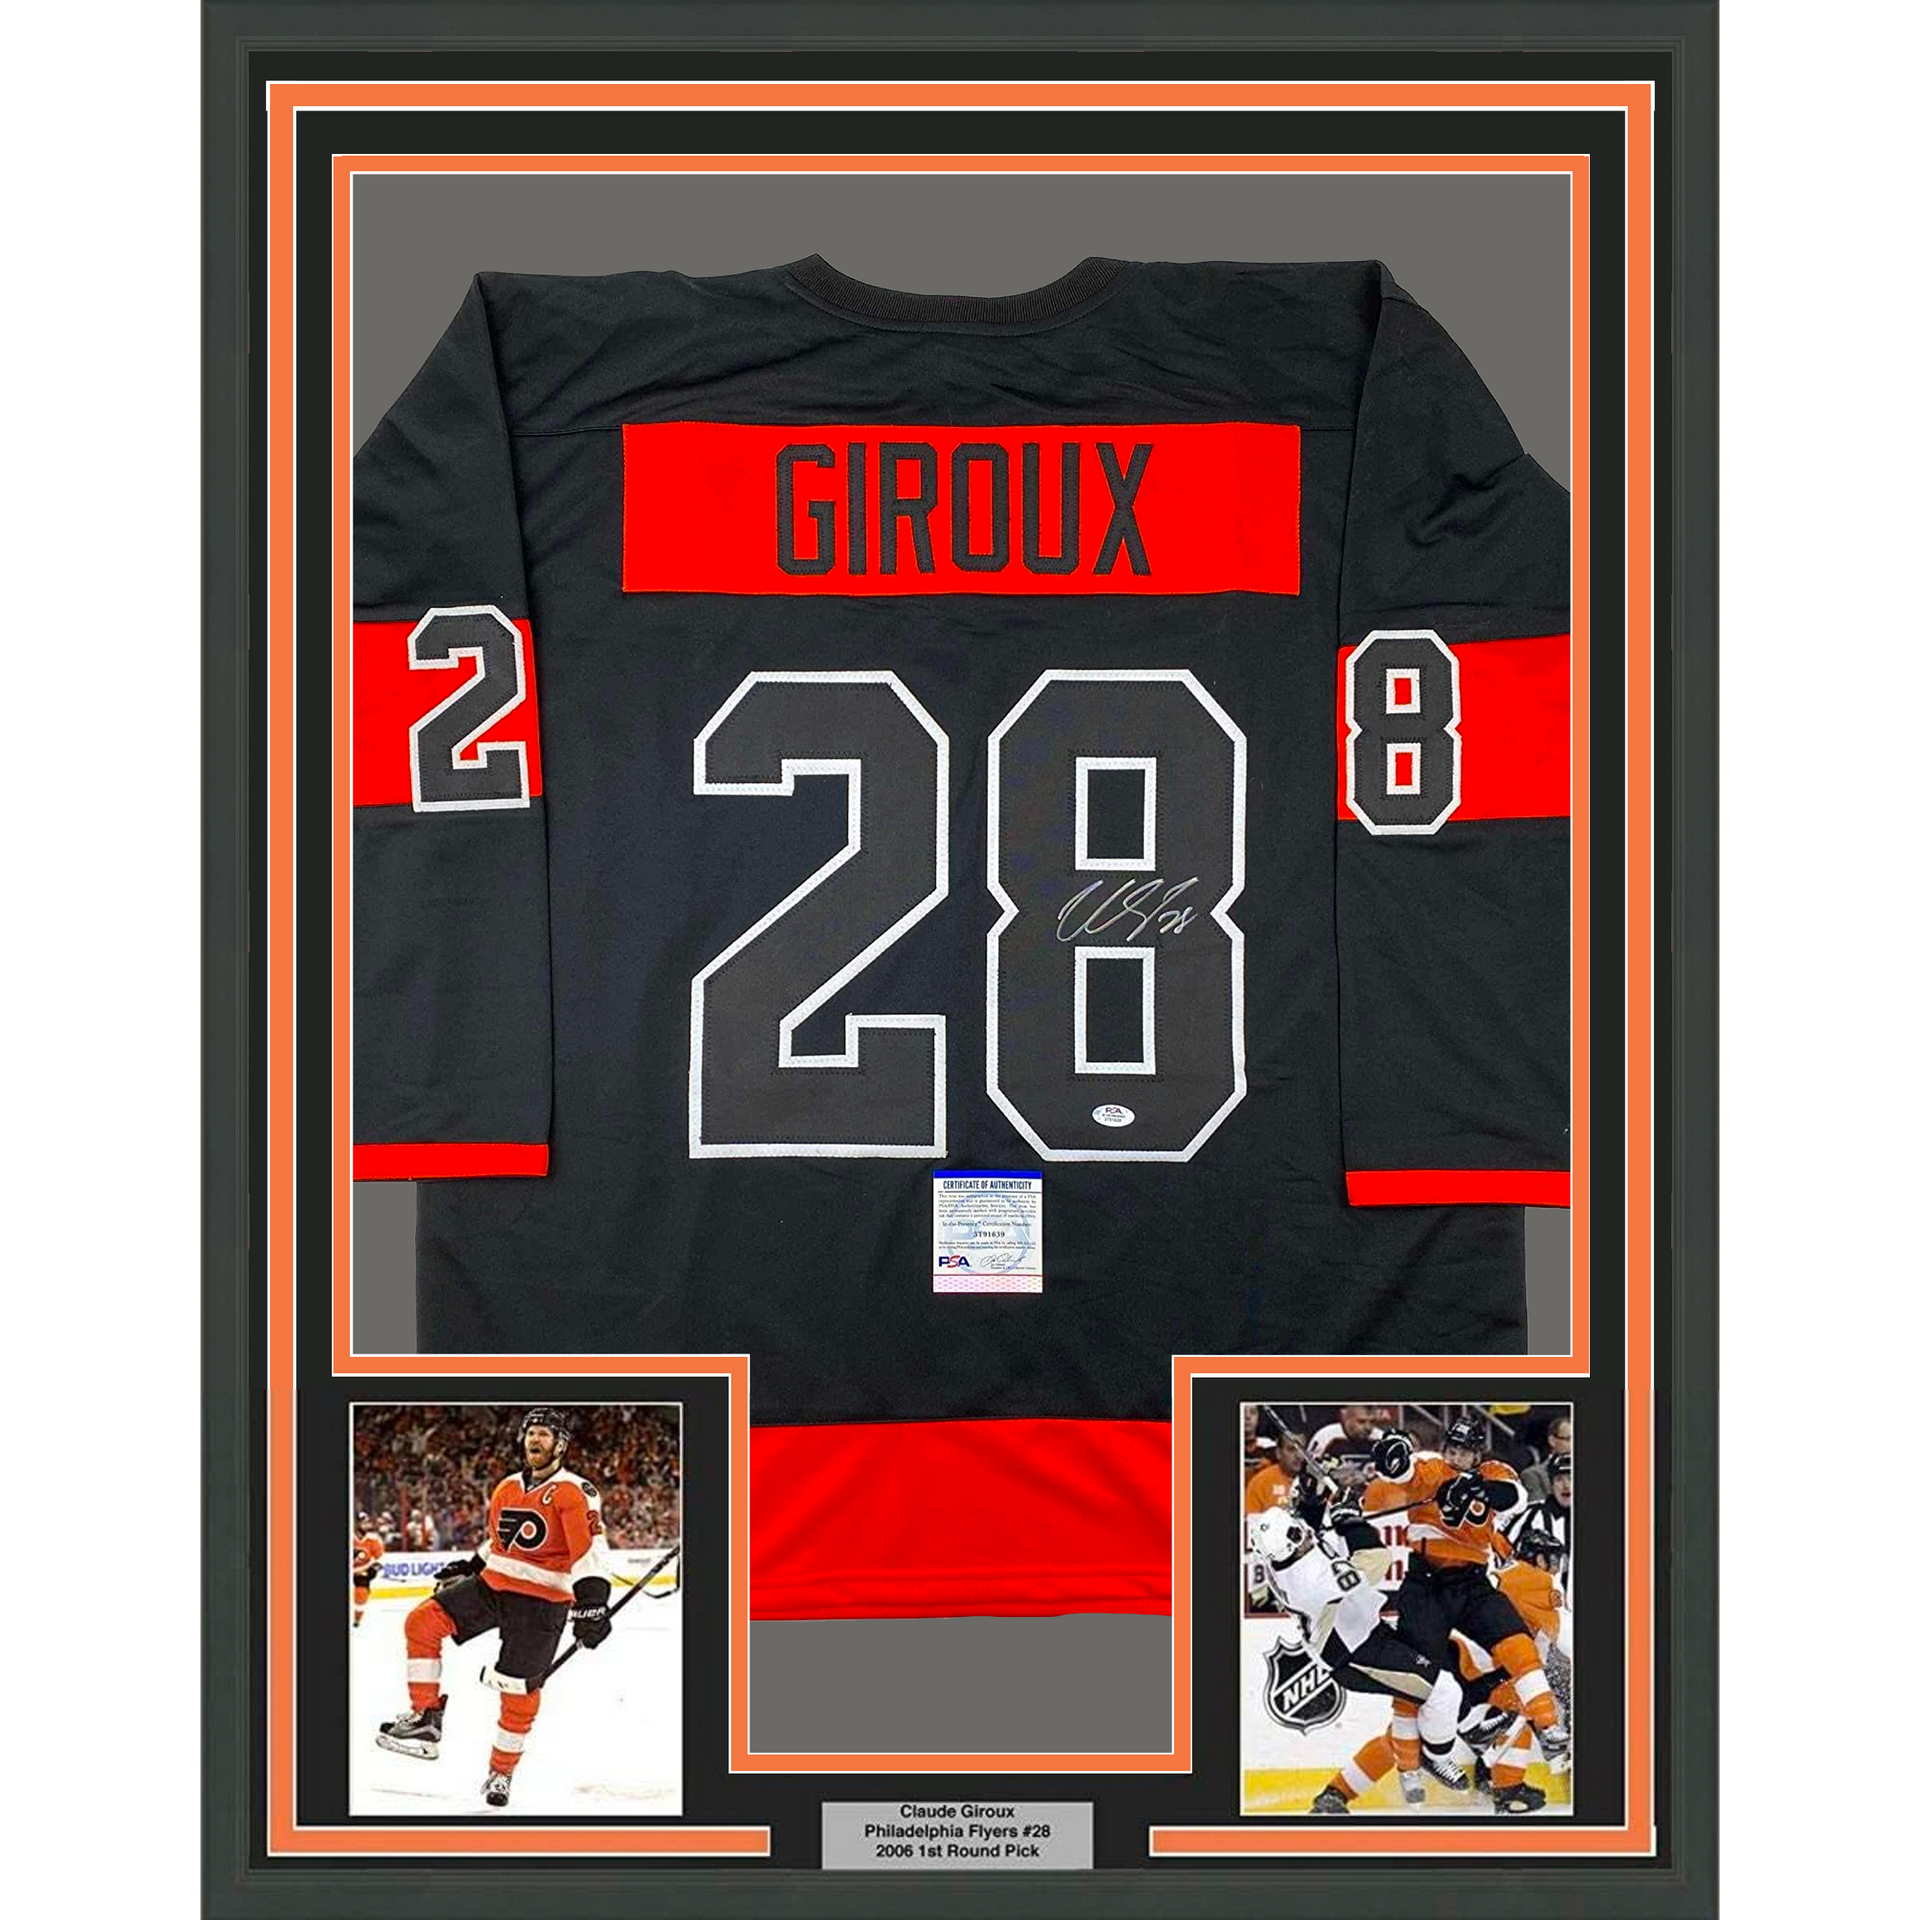 Claude Giroux Philadelphia Flyers Autographed Orange Adidas 2020-21 Reverse  Retro Authentic Jersey